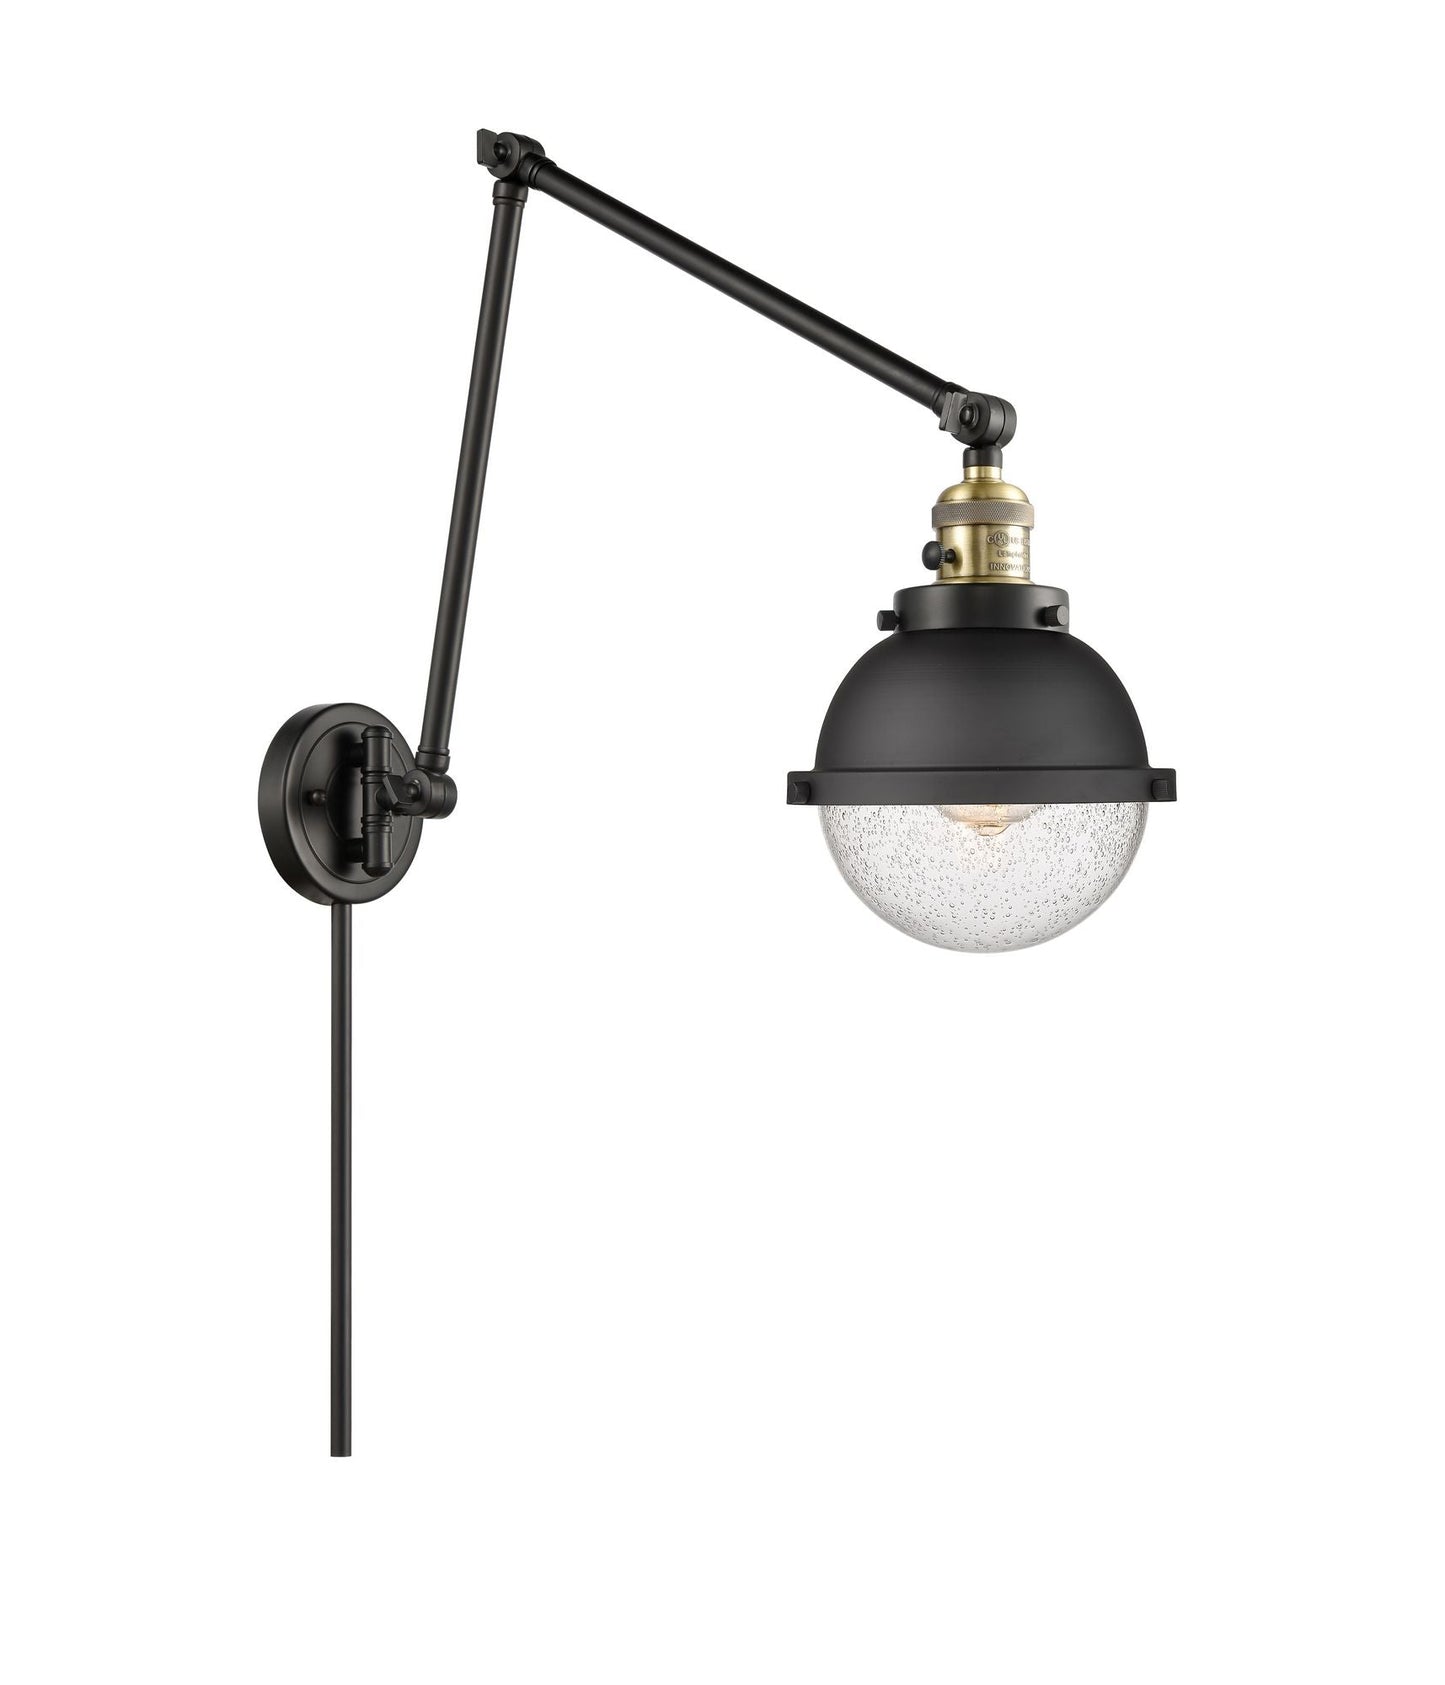 1-Light 7.25" Matte Black Hampden Swing Arm With Switch - Globe-Orb Seedy Glass - Incandesent Or LED Bulbs